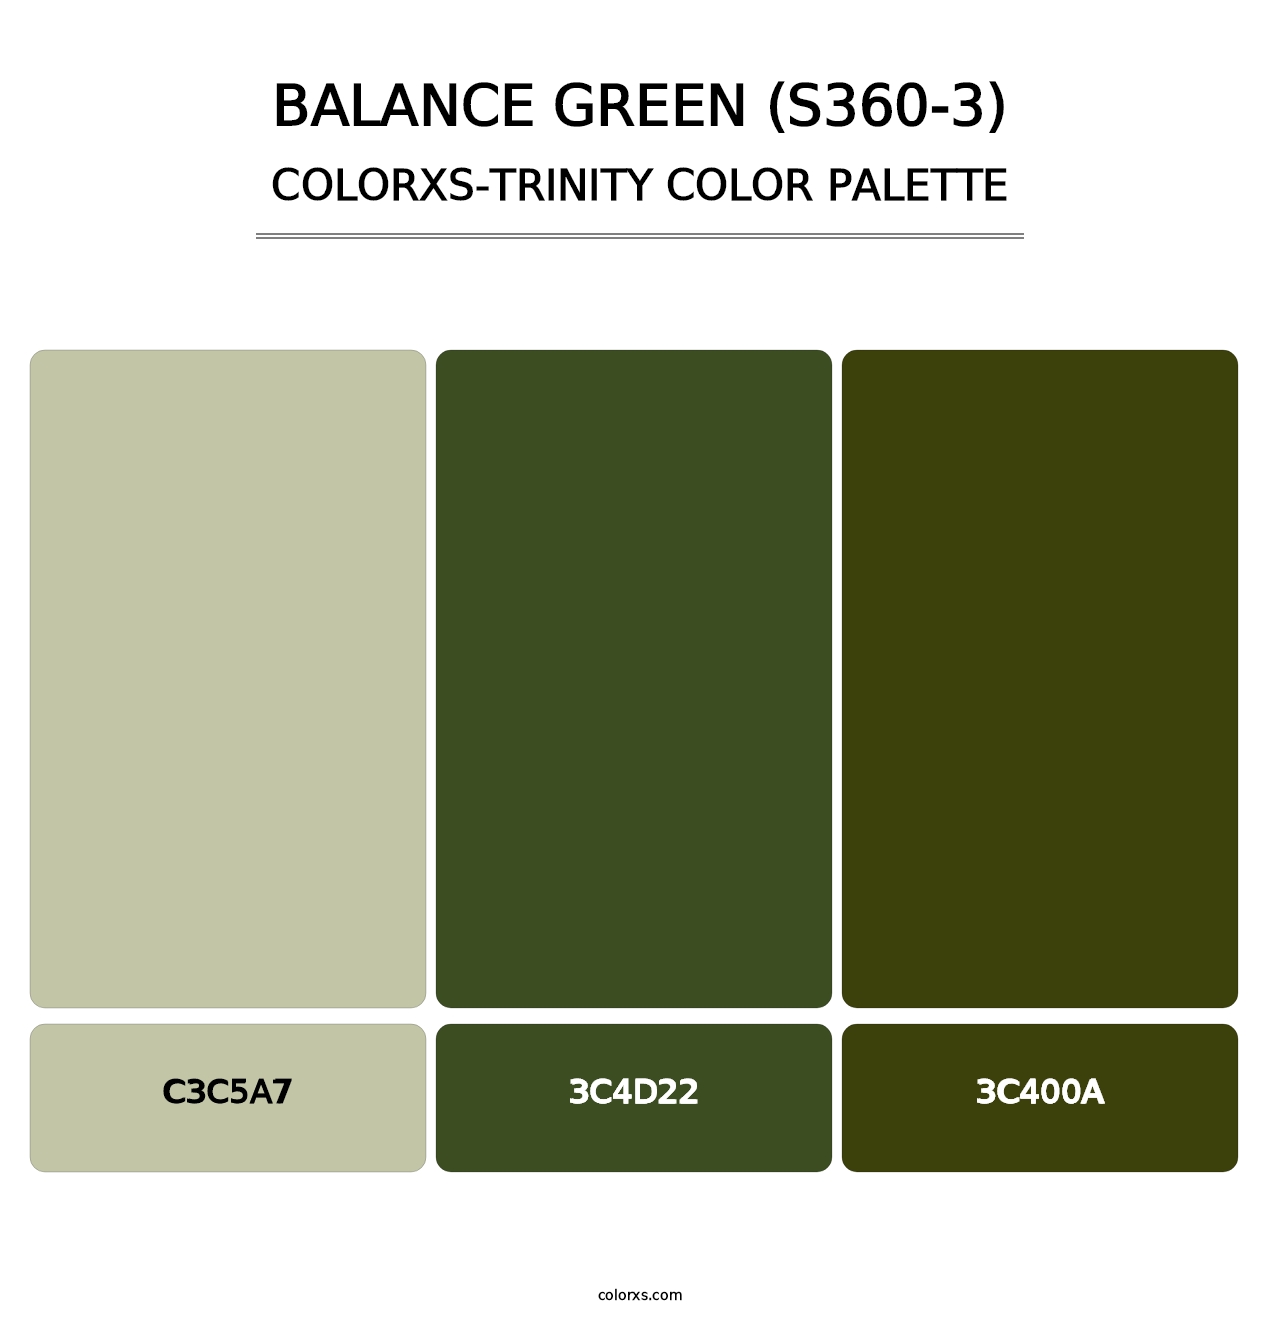 Balance Green (S360-3) - Colorxs Trinity Palette